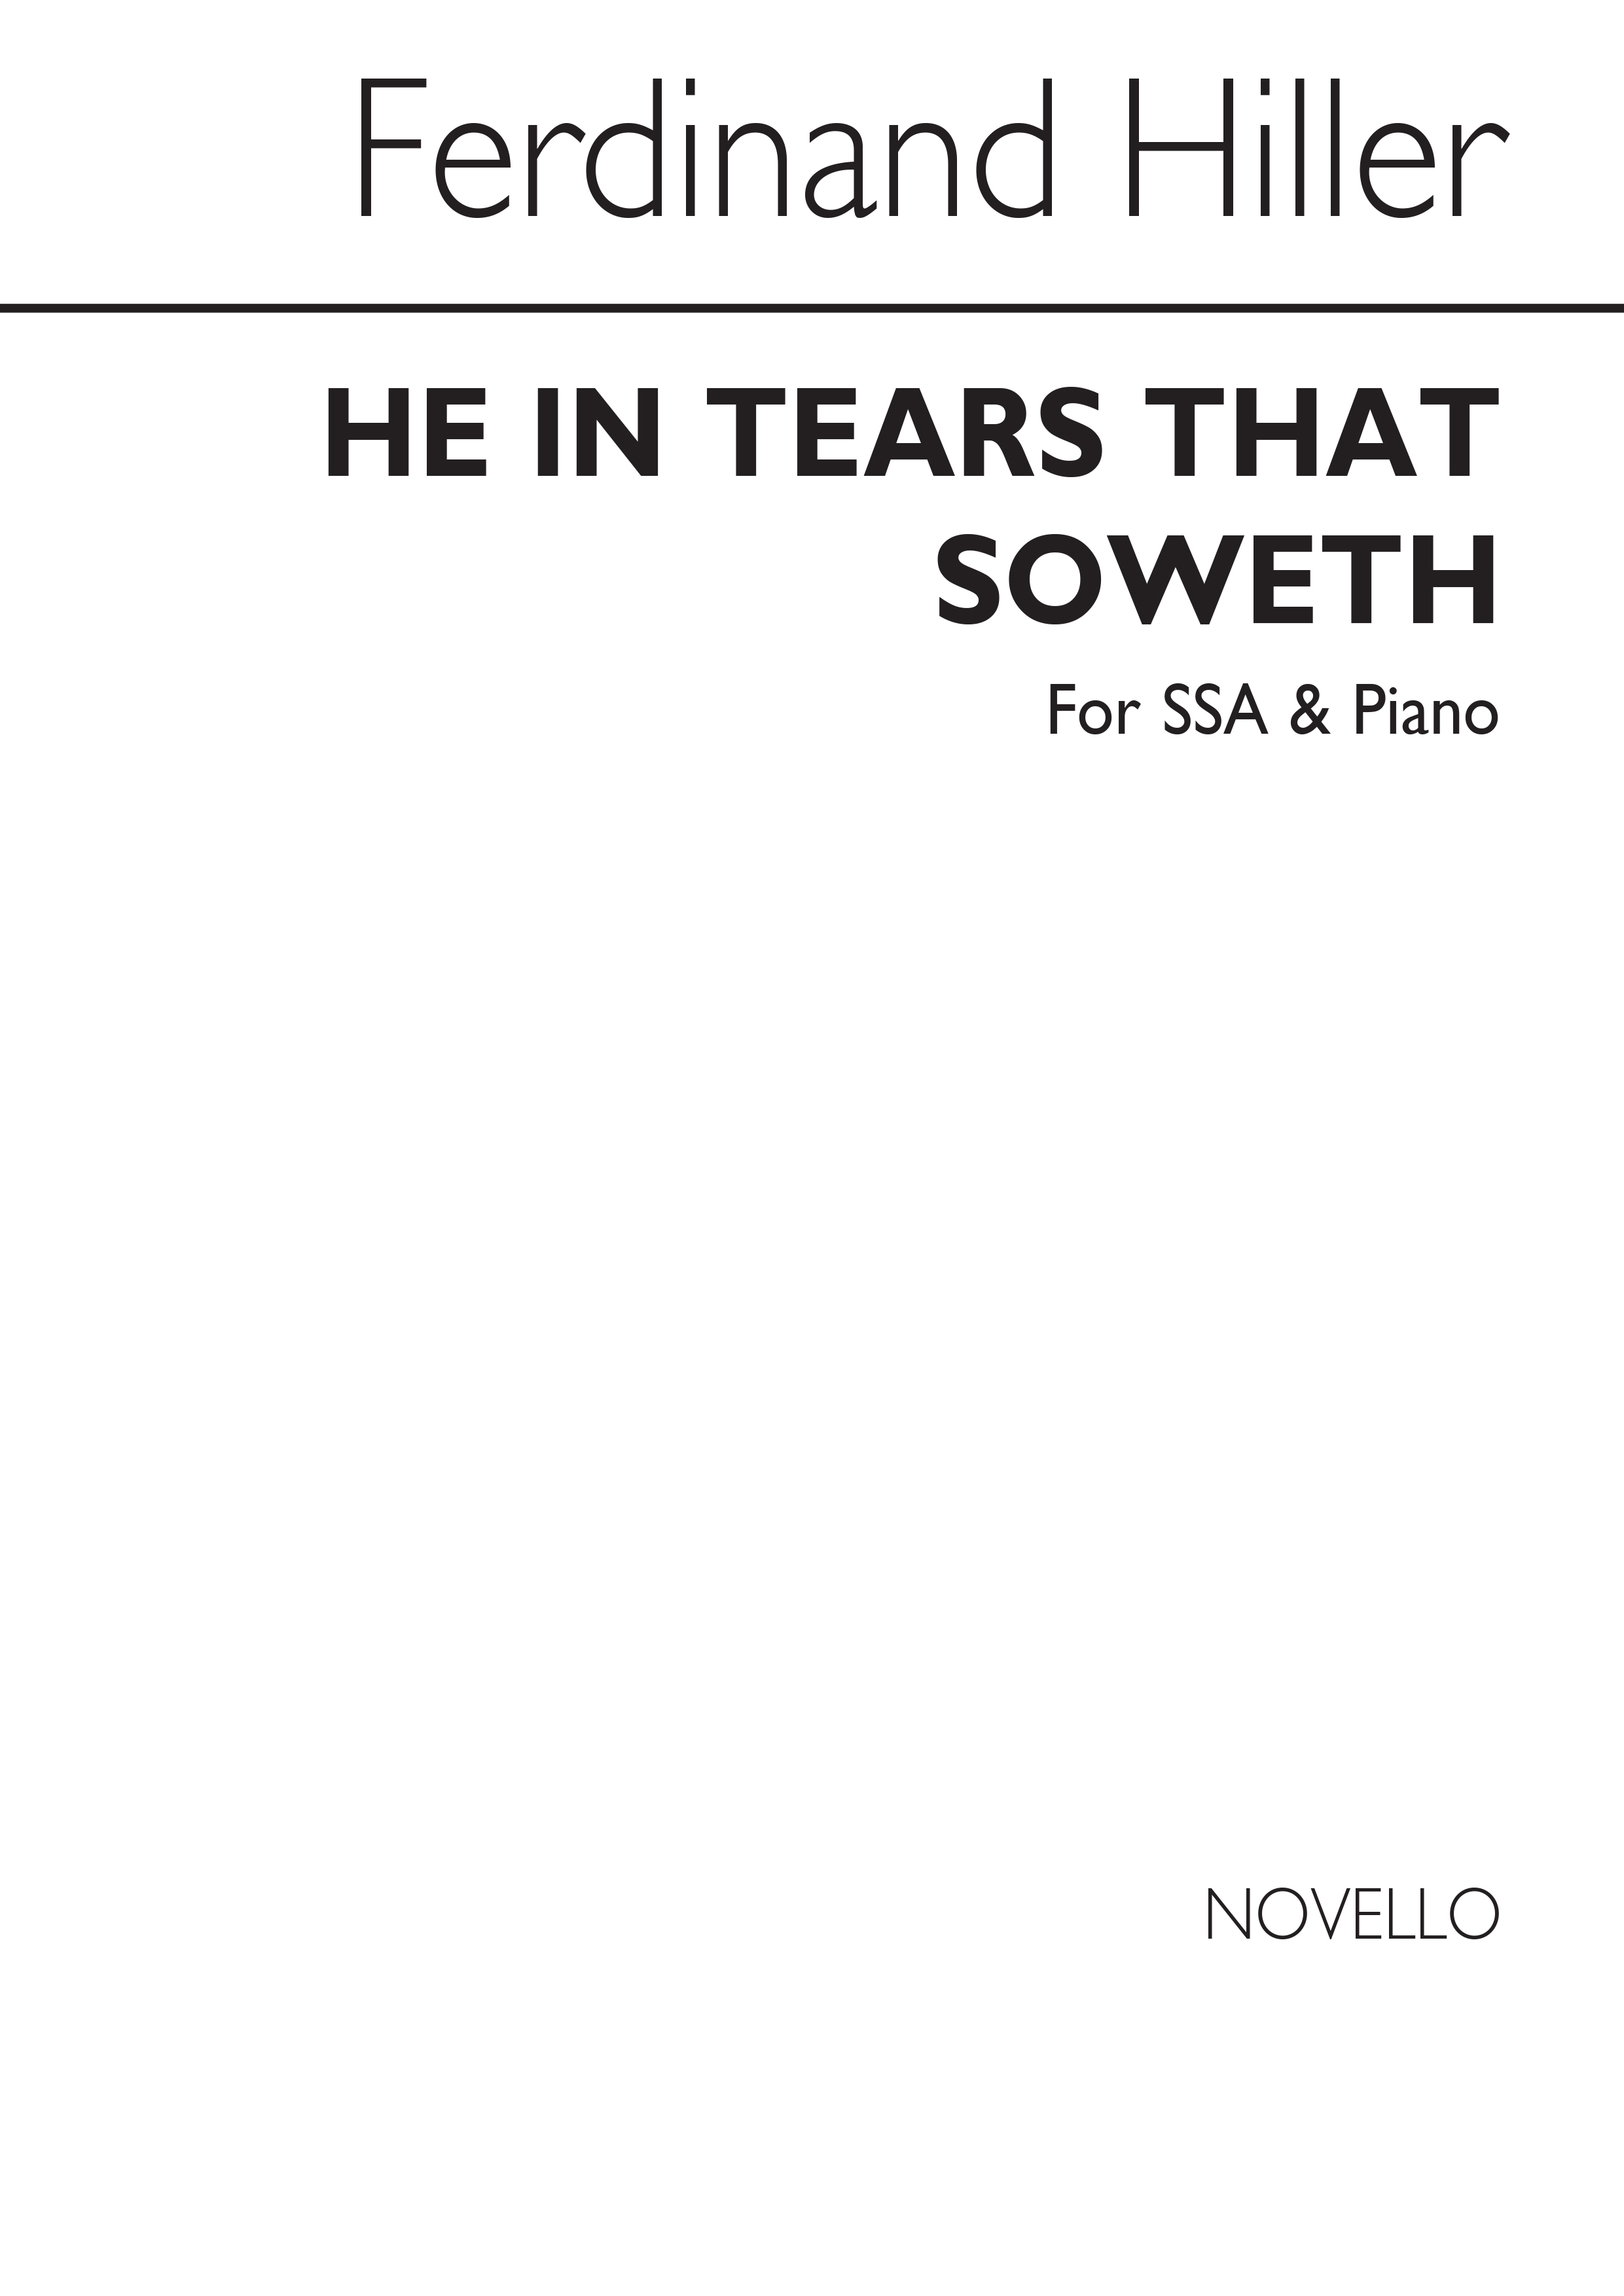 Ferdinand Hiller: He In Tears That Soweth Ssa/Piano